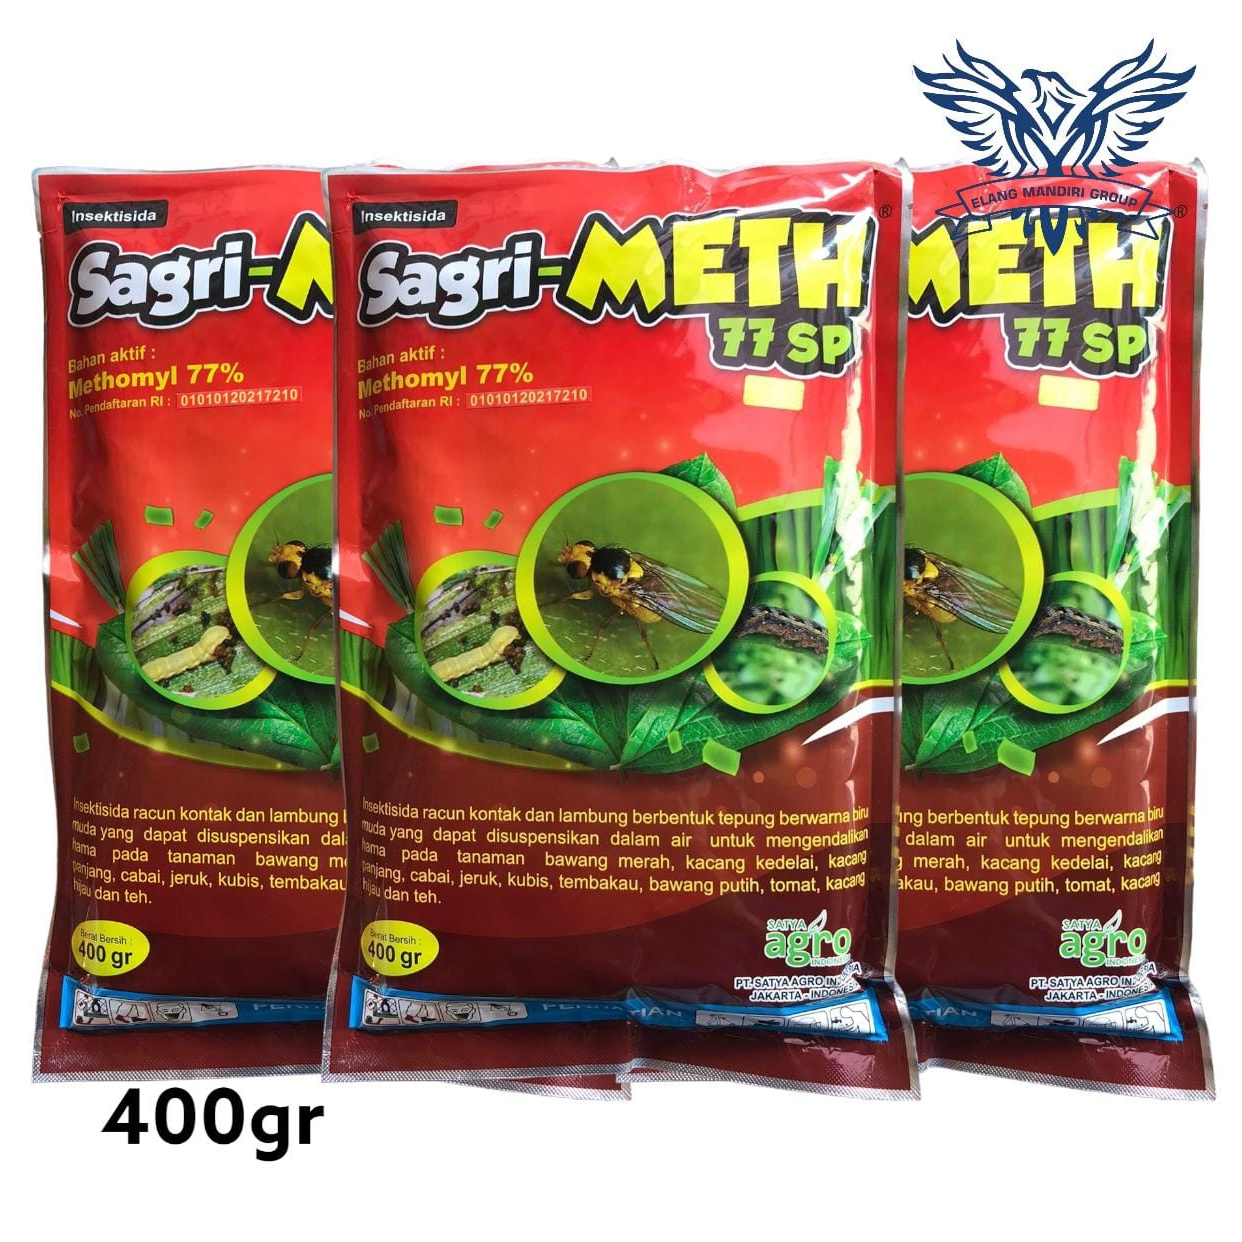 SAGRI-METH 77SP 400gr Insektisida Methomyl 77% Mengendalikan Hama Ulat Dan Telur Pada Tanaman Dumil Lannate